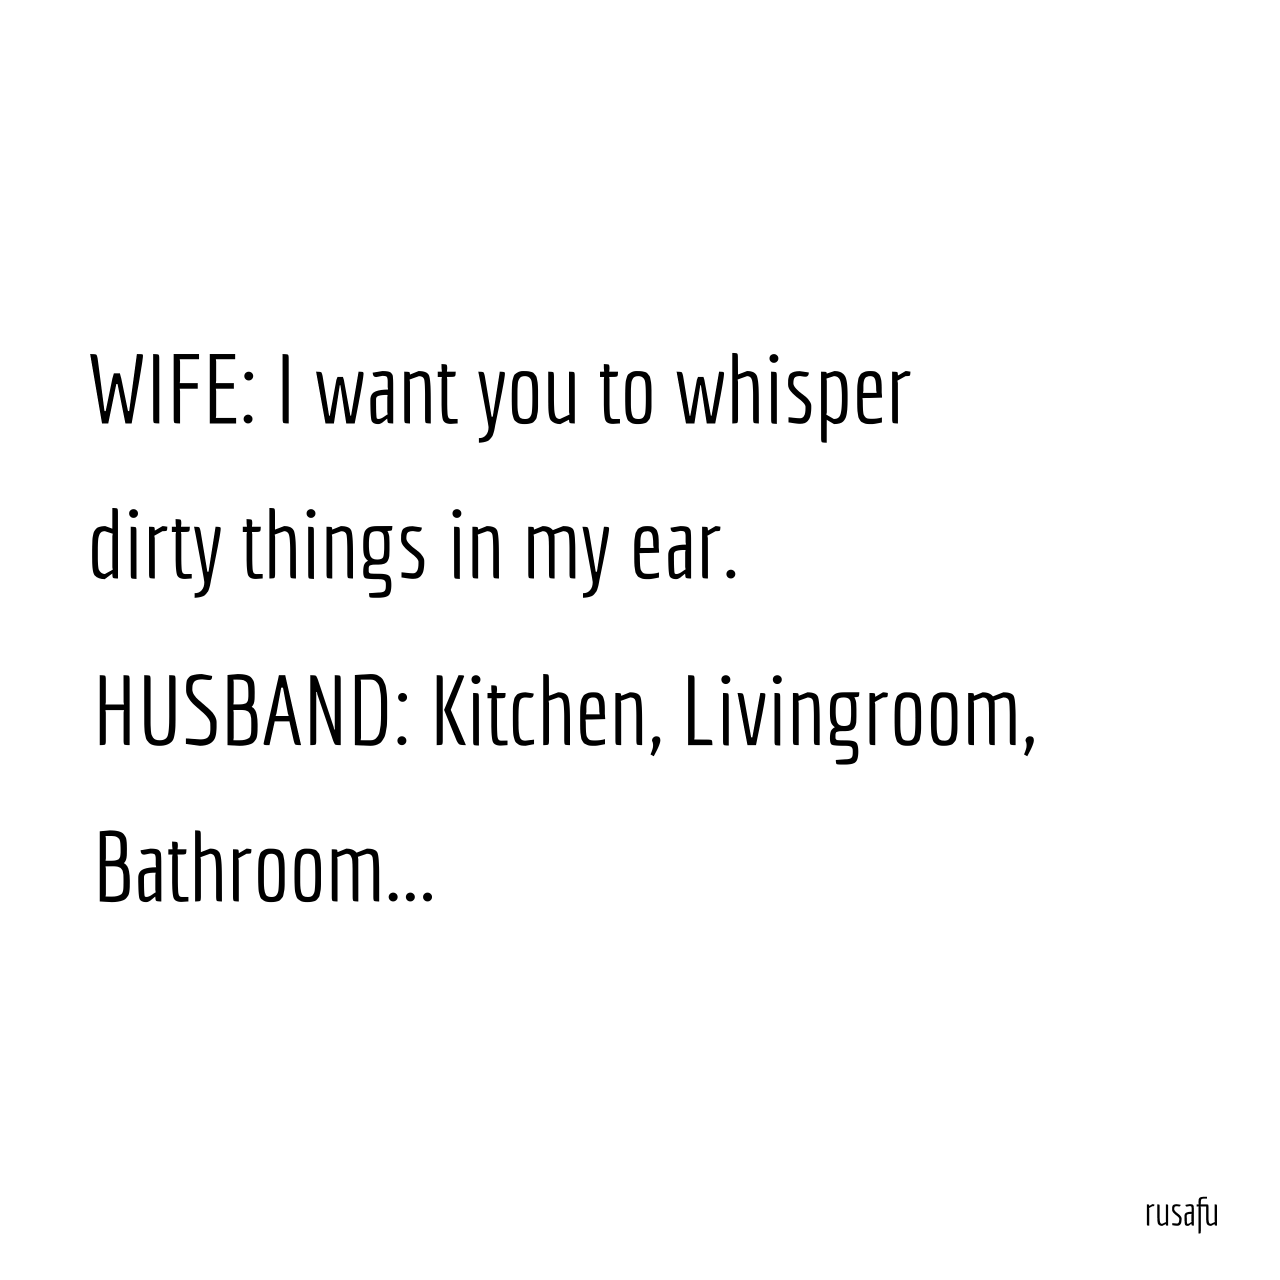 WIFE: I want you to whisper dirty things in my ear. HUSBAND: Kitchen, Livingroom, Bathroom…